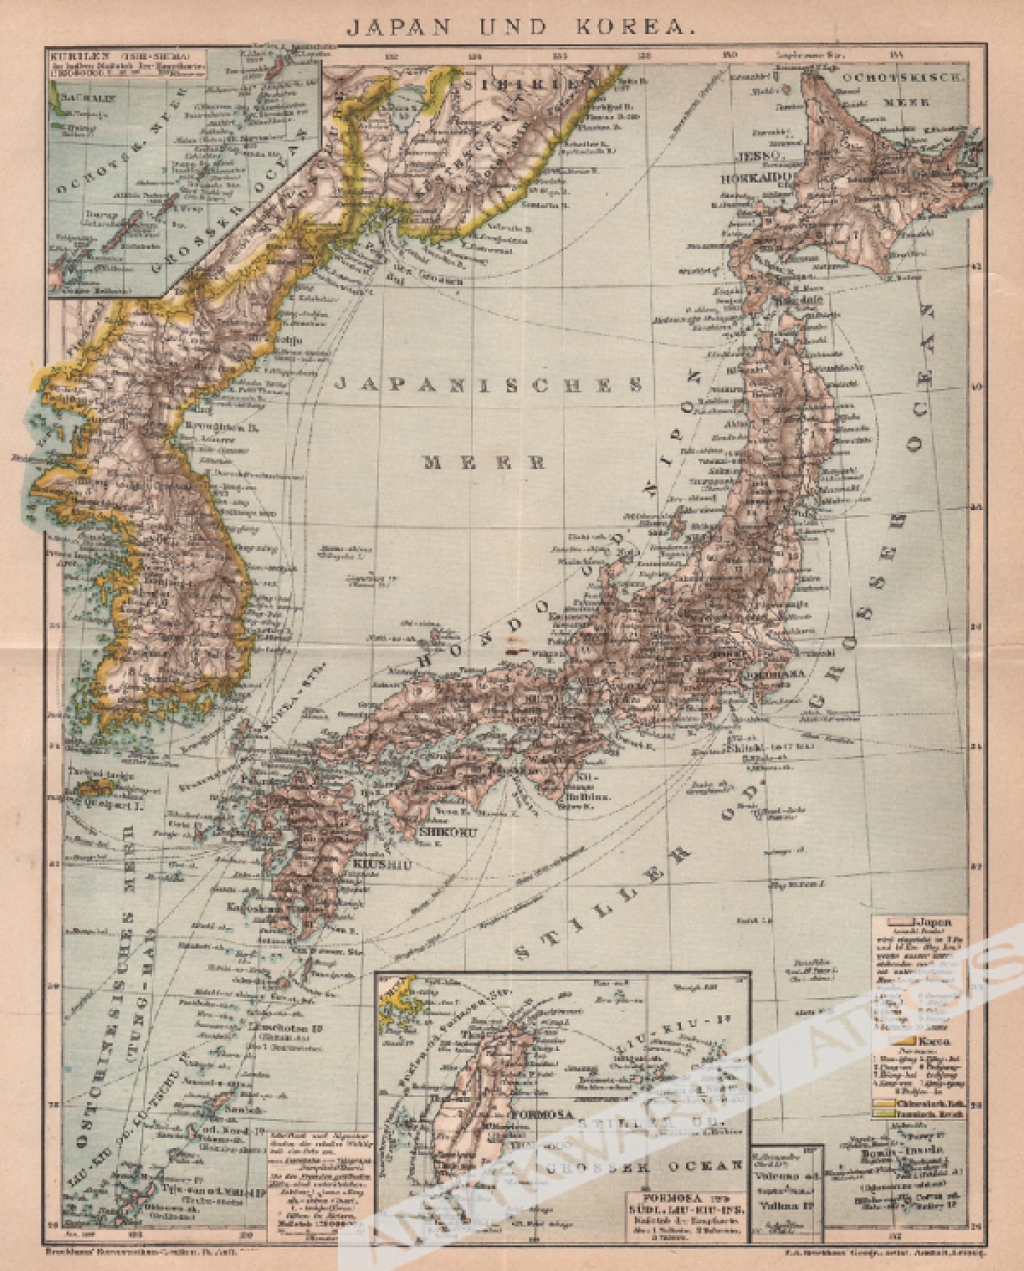 [mapa, 1898] Japan und Korea [Japonia i Korea]